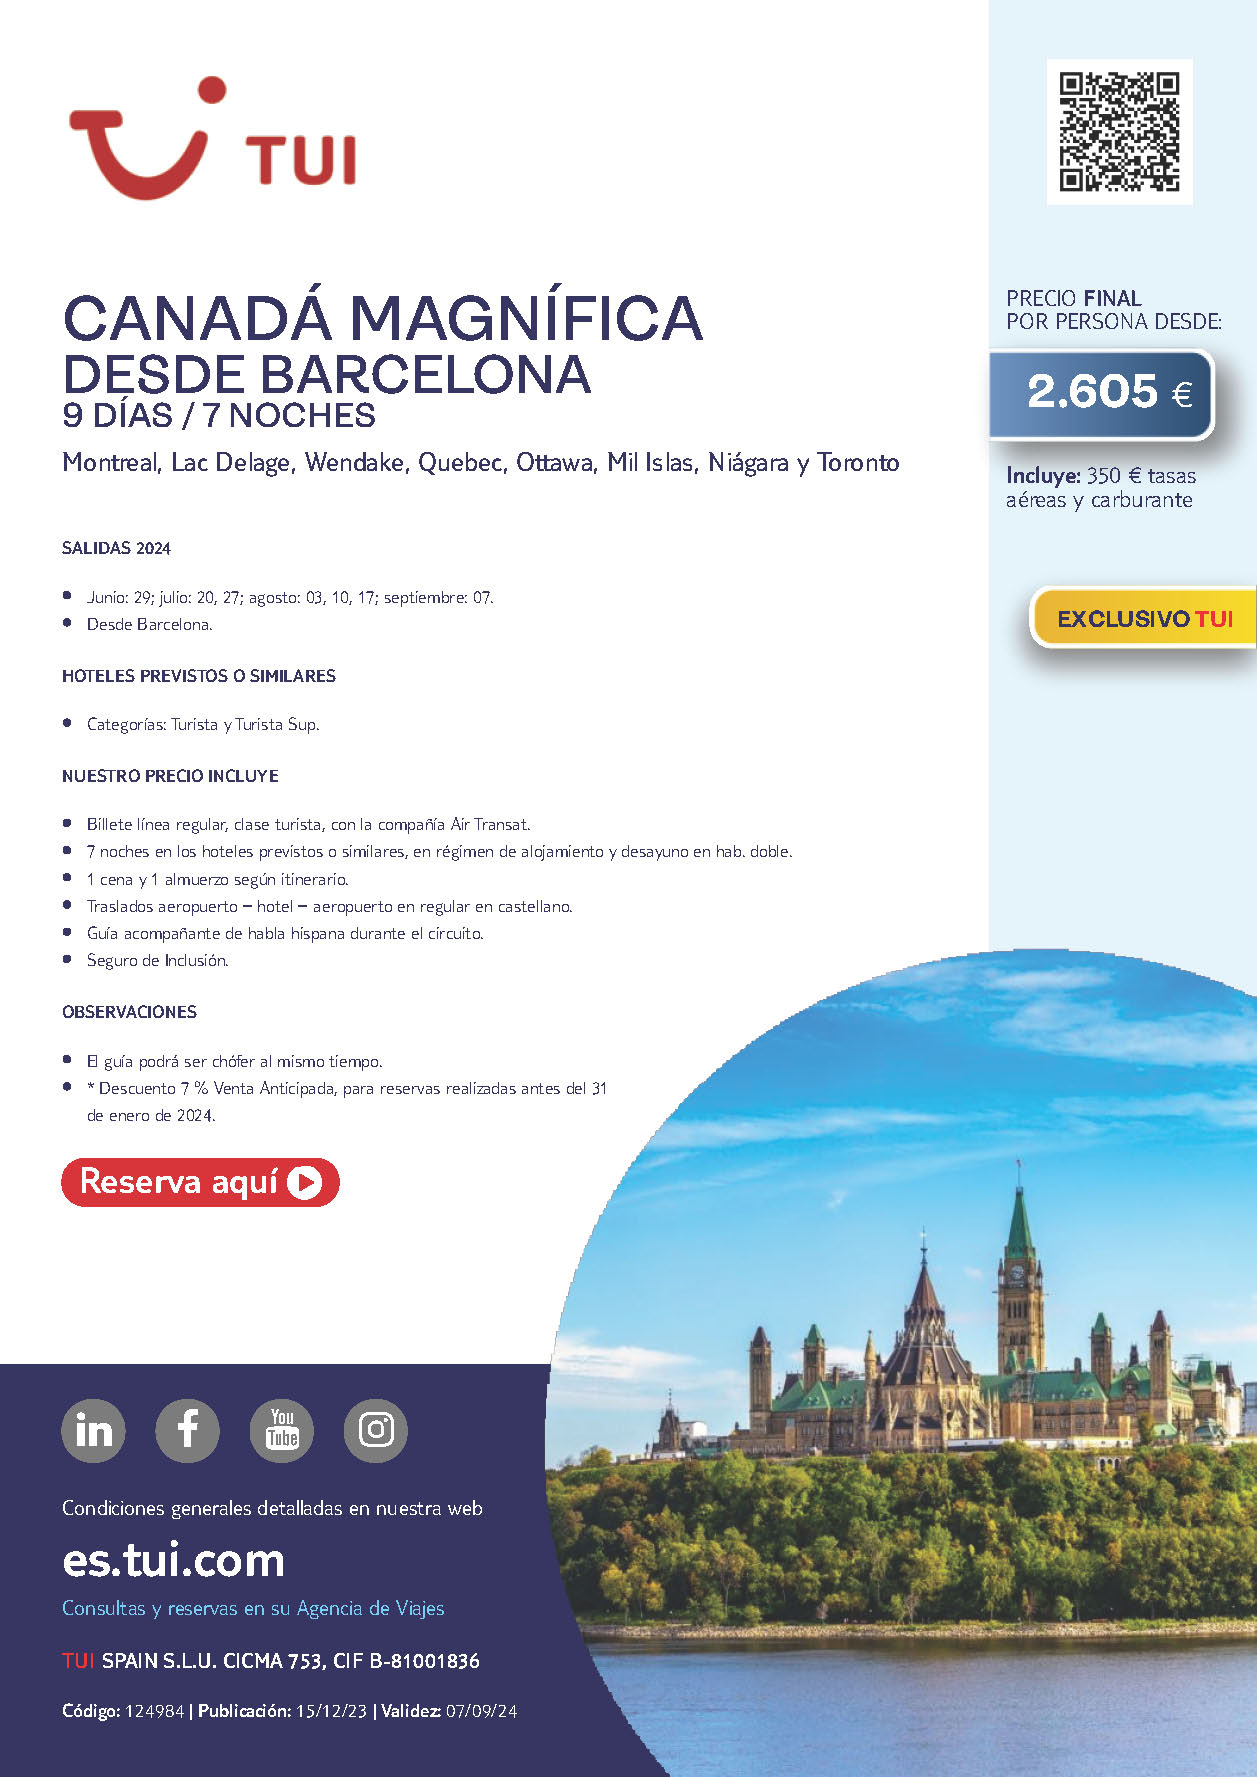 Oferta TUI circuito Canada Magnifica Costa Este 9 dias salidas Junio a Septiembre 2024 desde Barcelona vuelos Air Transat